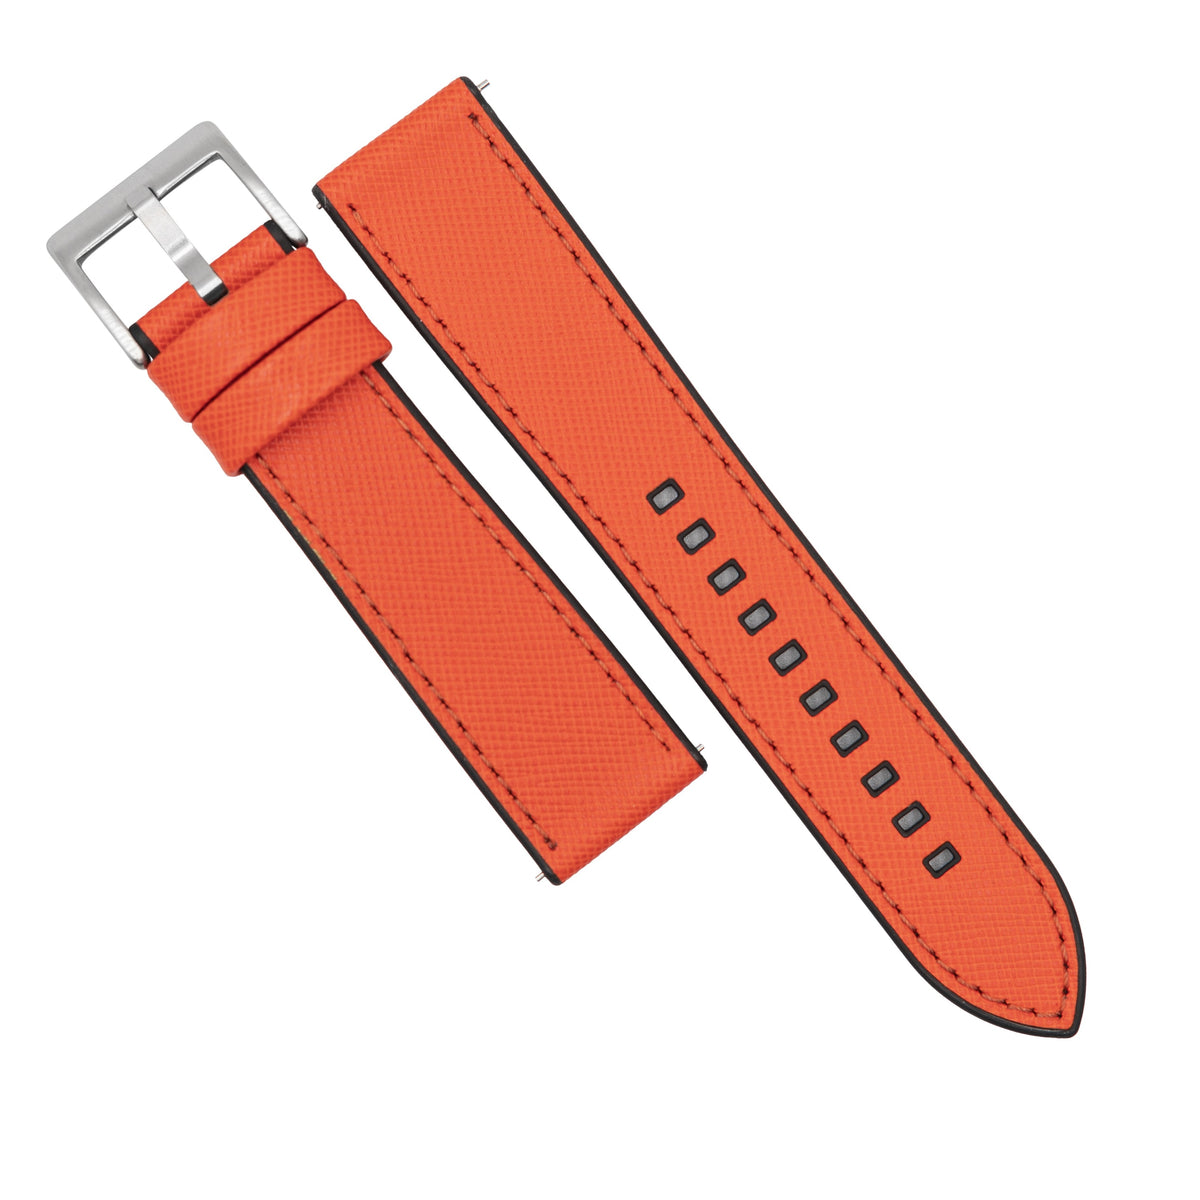 Performax Saffiano Leather FKM Rubber Hybrid Strap in Orange (20mm) - Nomad Watch Works MY